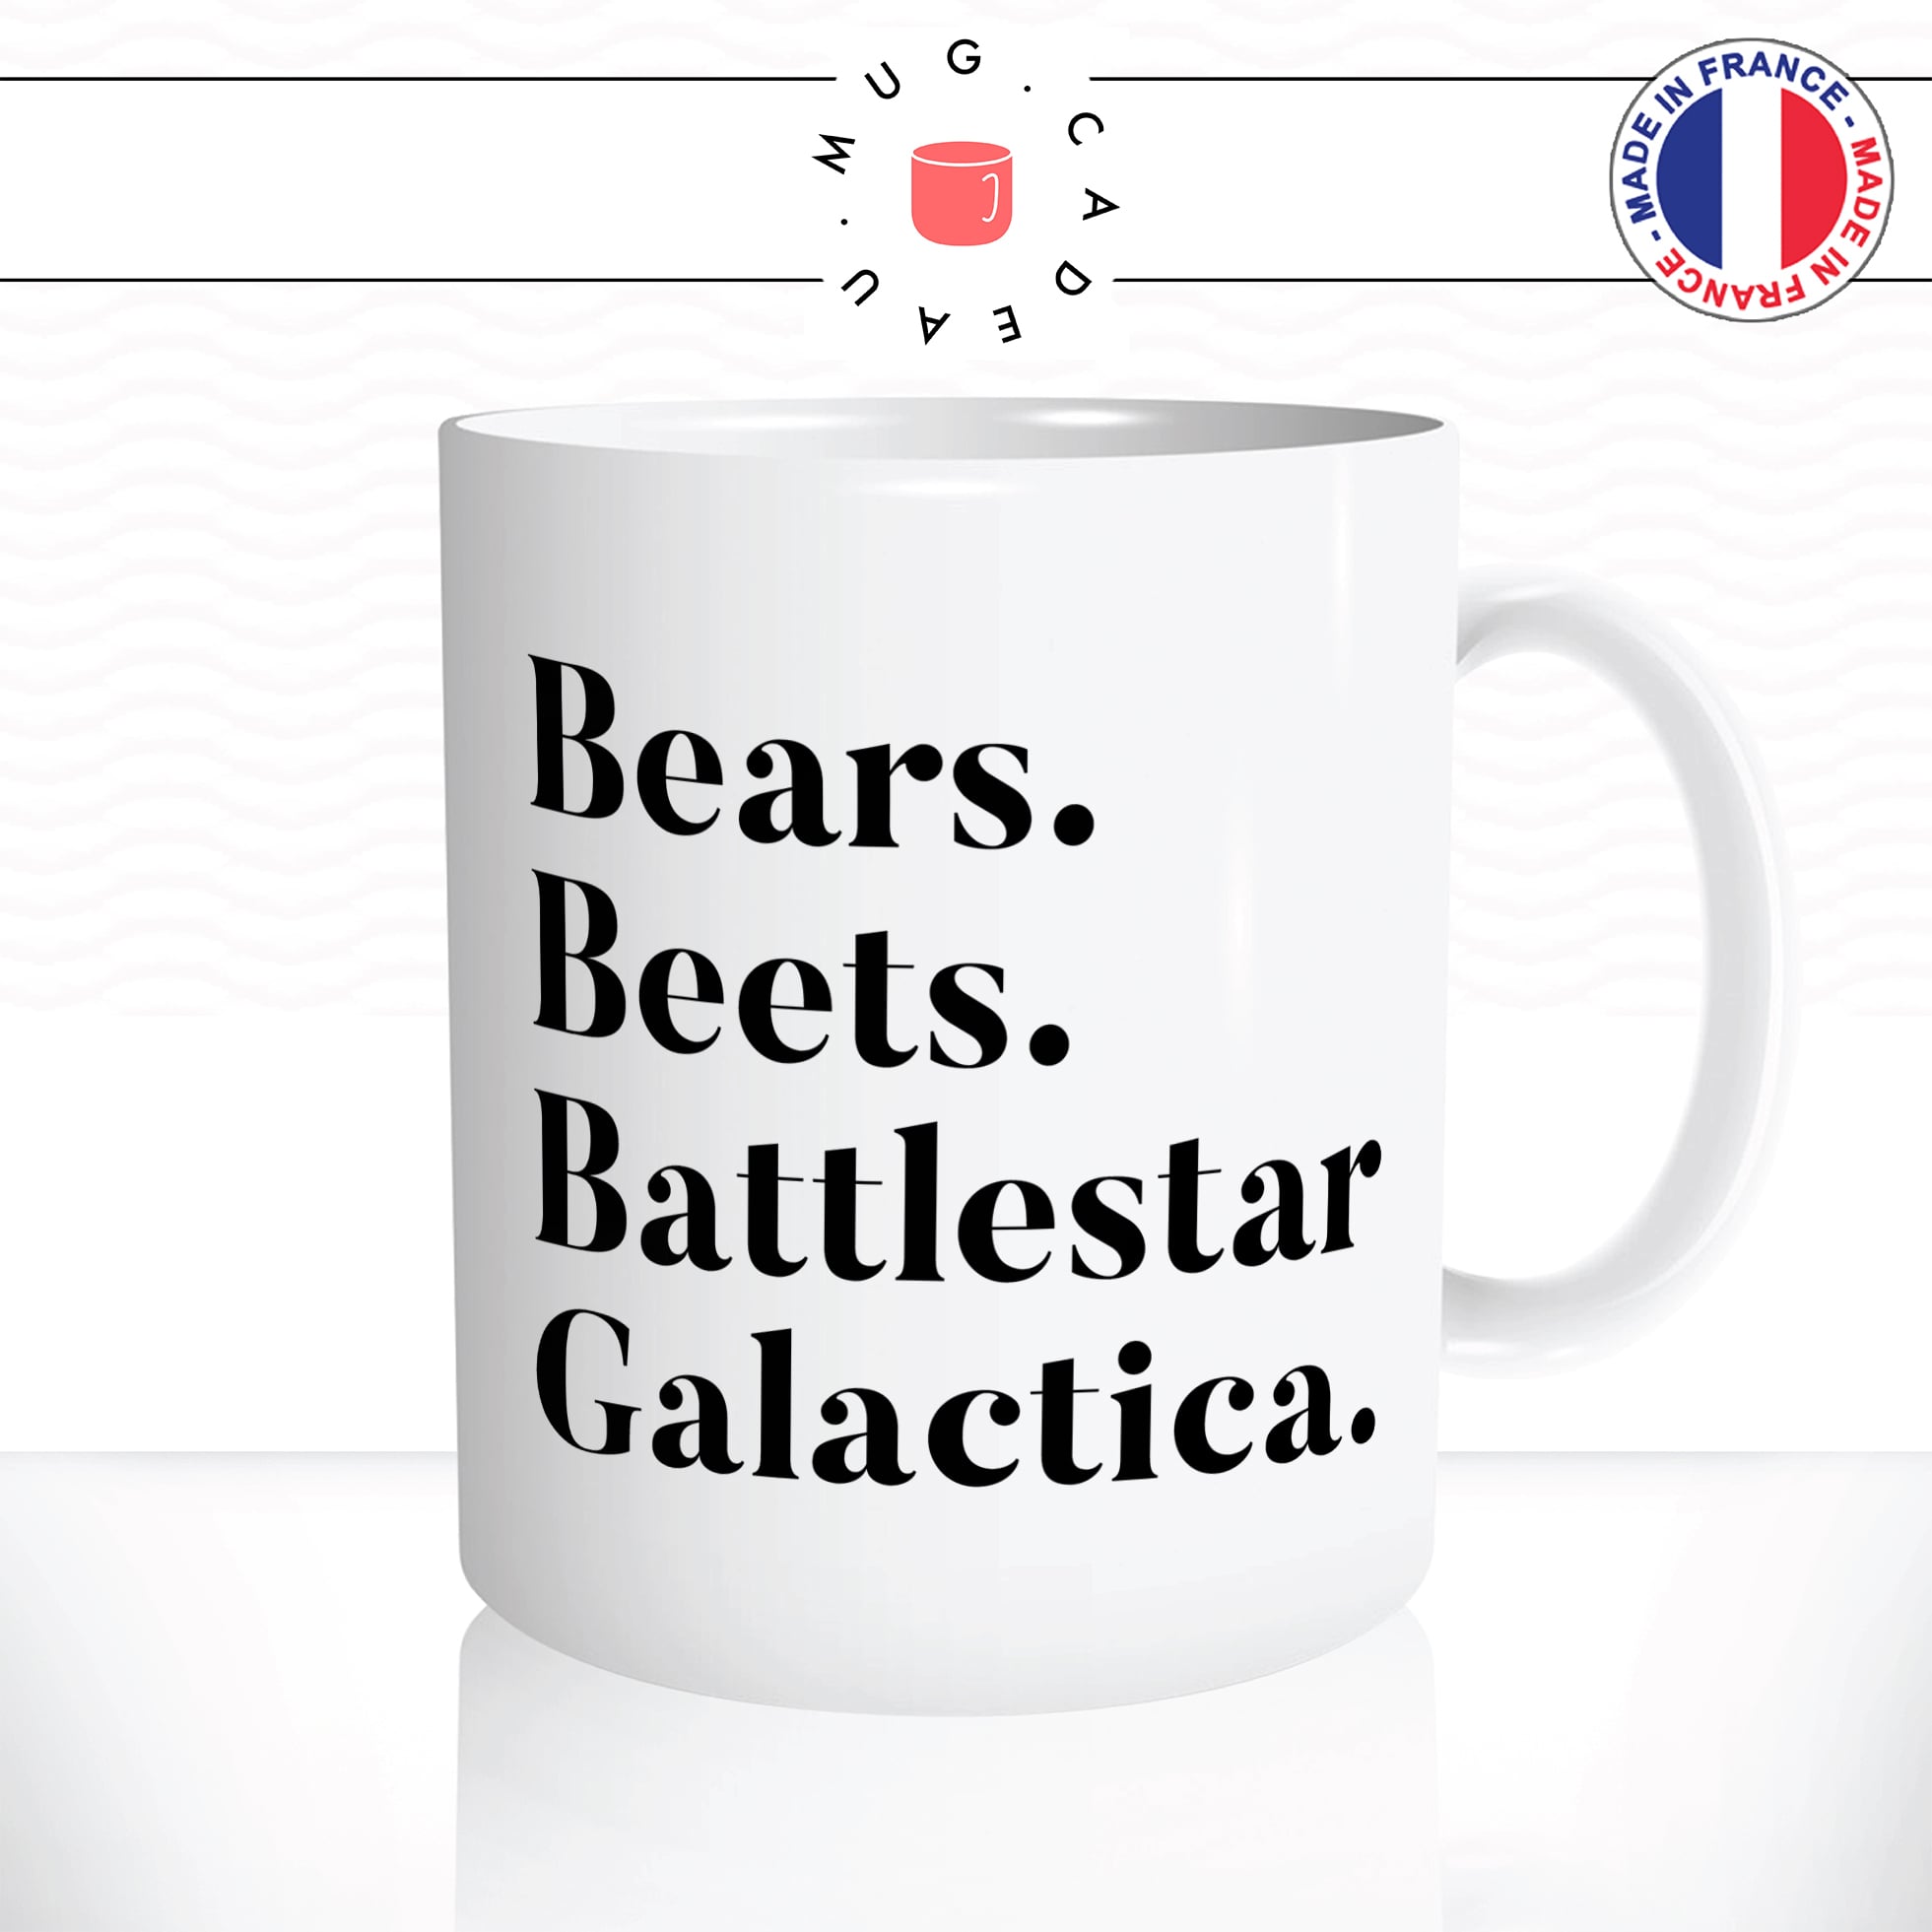 mug-tasse-bears-beets-battlestar-galactica-the-office-série-dwight-jim-humour-fun-drole-idée-cadeau-original-café-thé-personnalisée2-min